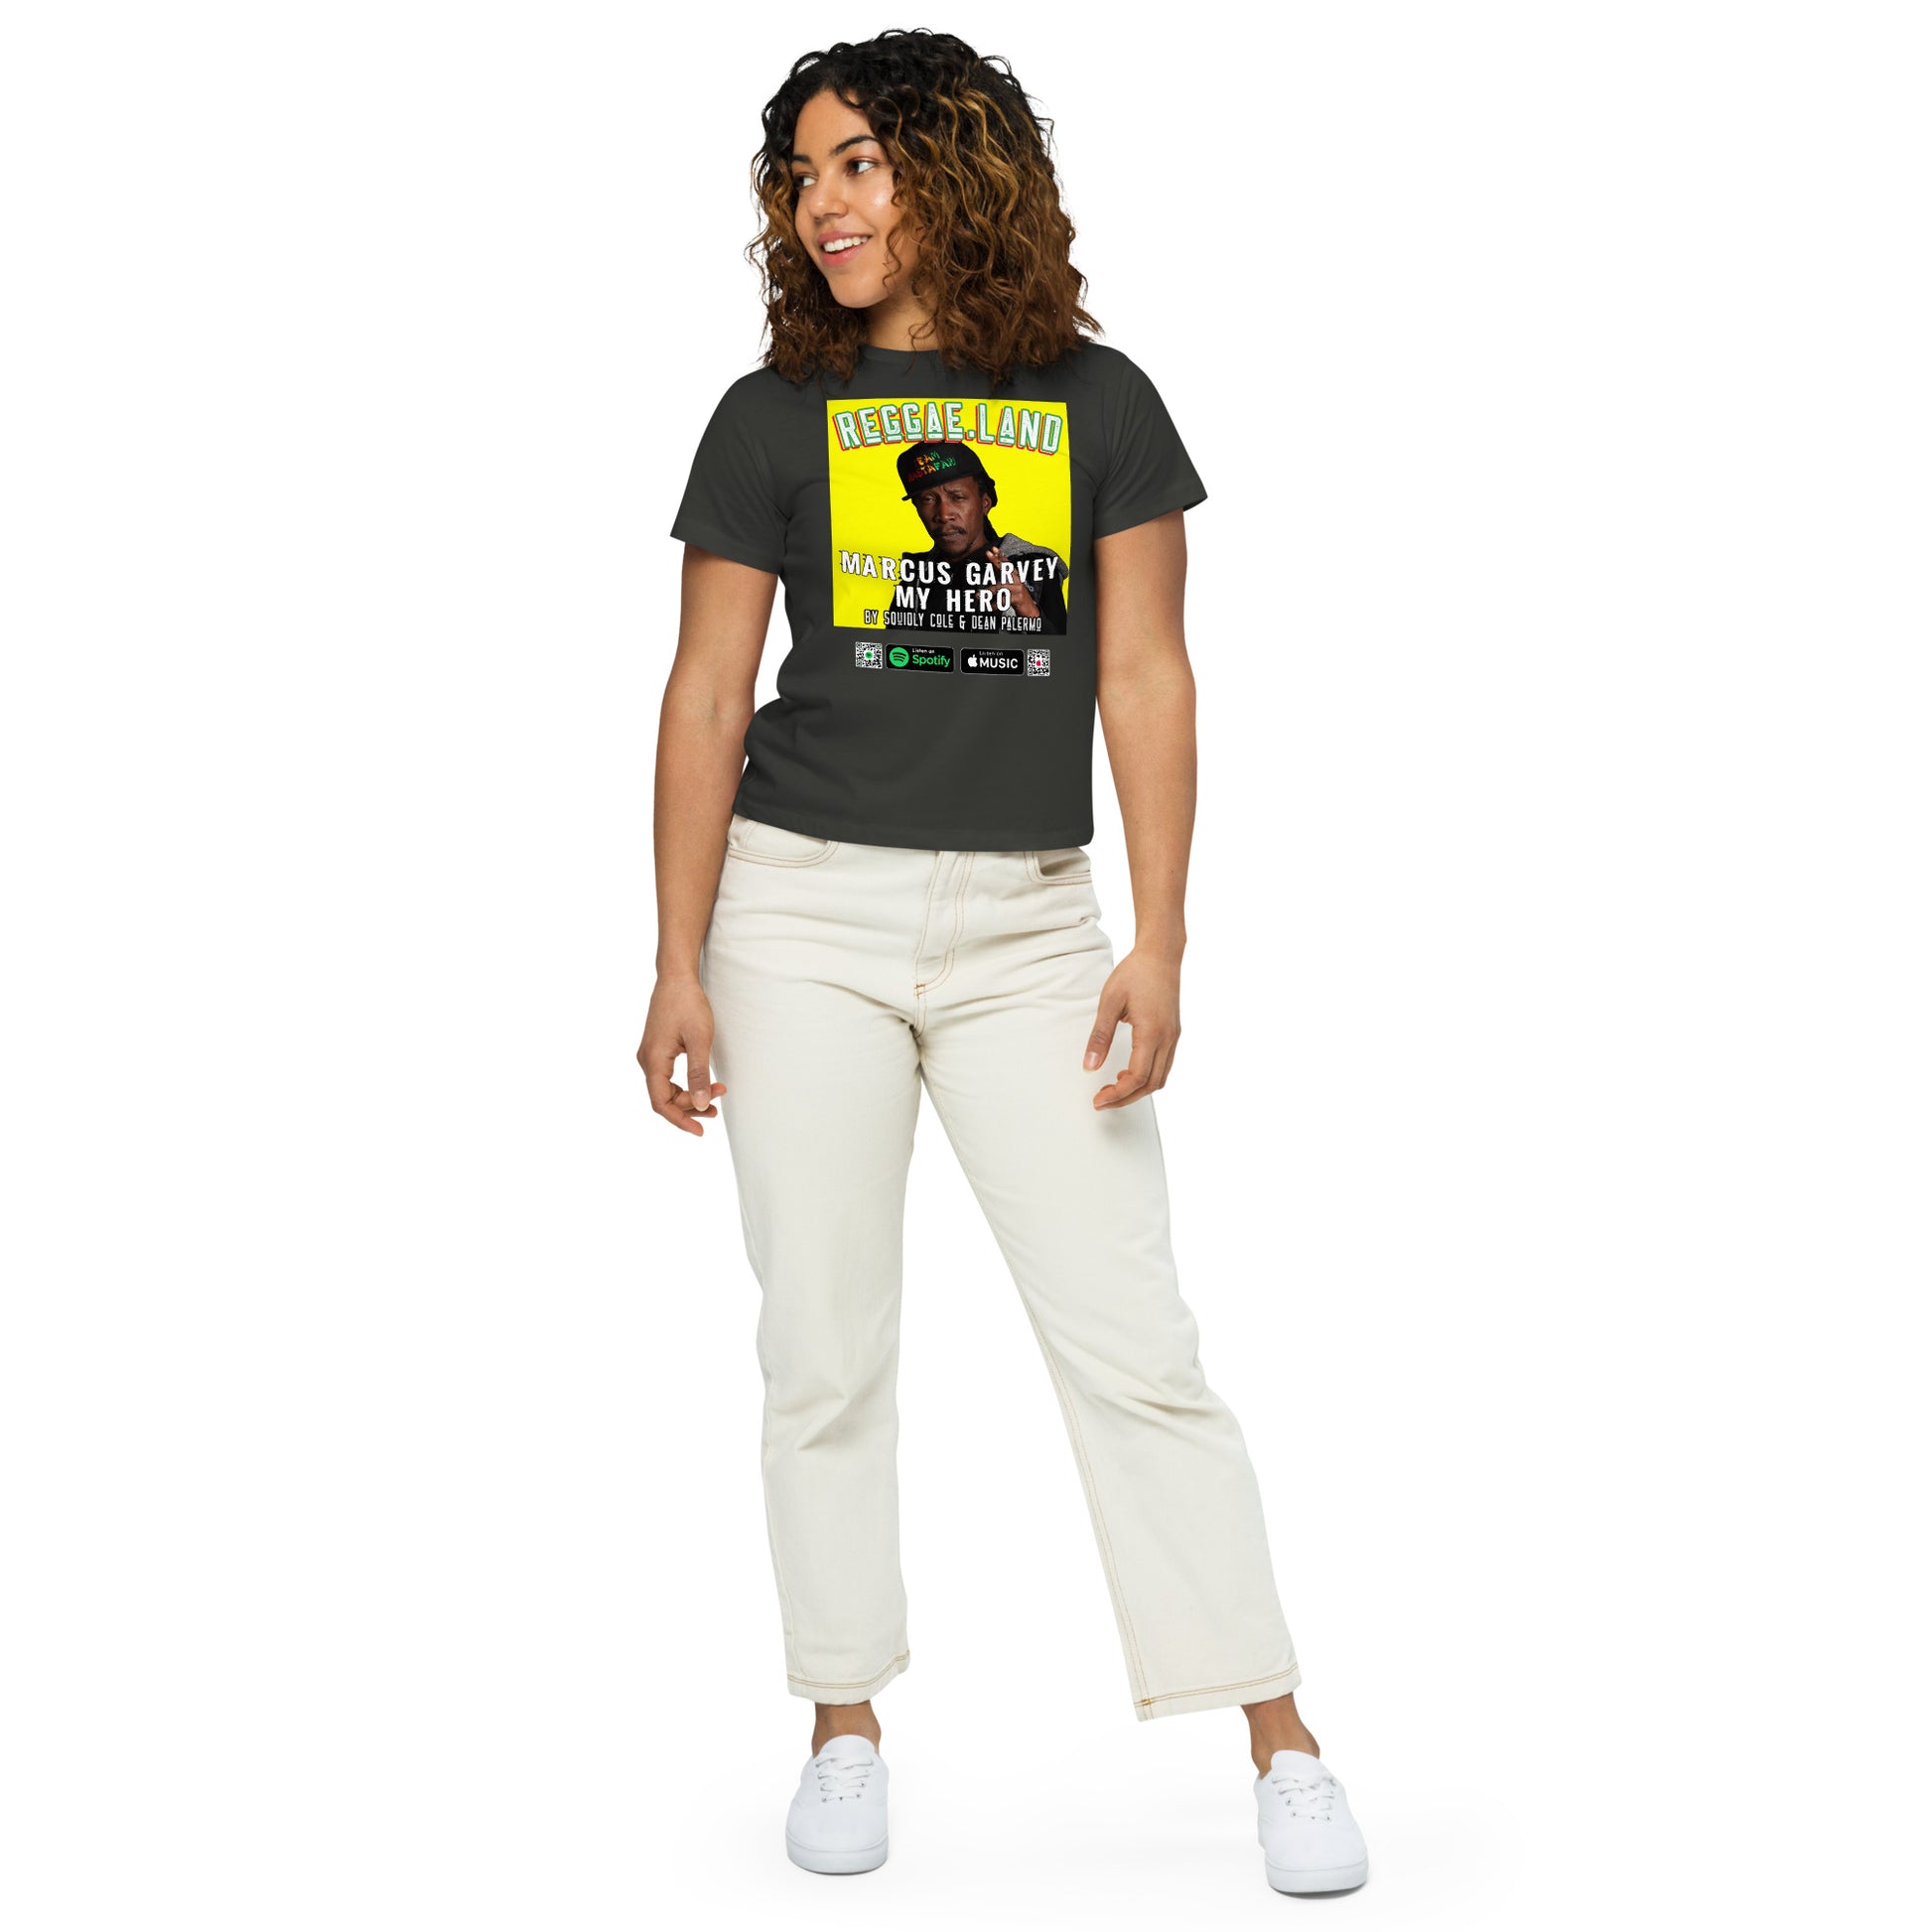 Radiate Heroism: Reggae.Land Women's High-Waisted T-Shirt - Artwork #010. Marcus Garvey's essence, exclusively at Stashbox.ai.